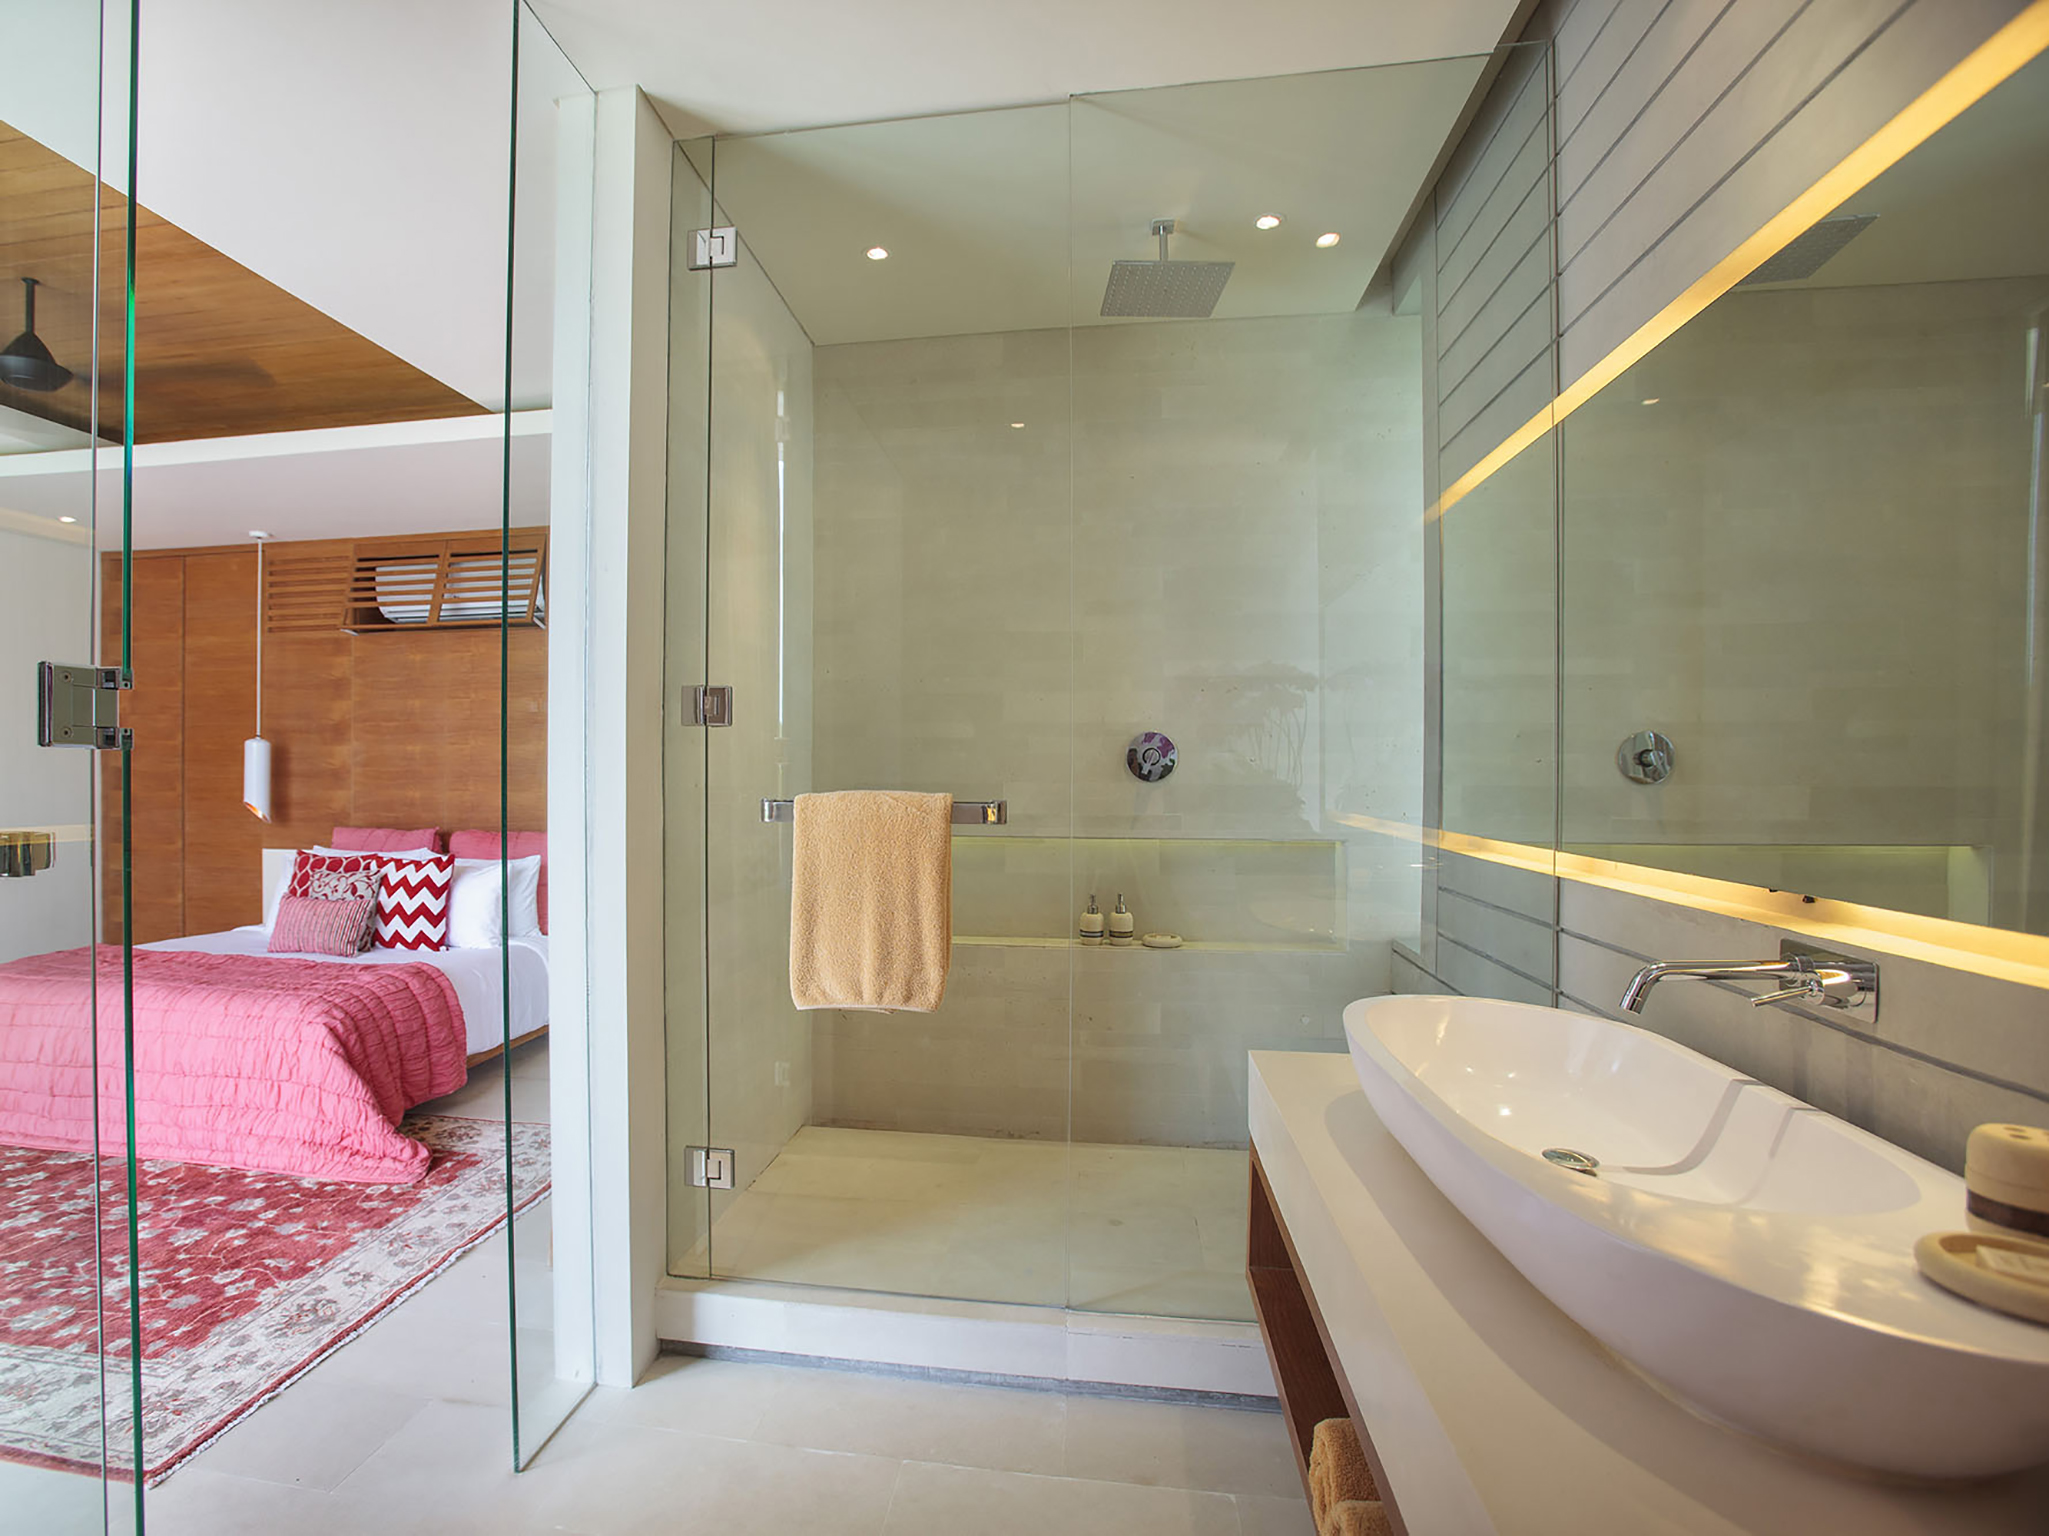 The Iman Villa - Guest bedroom and ensuite bathroom - The Iman Villa, Canggu, Bali